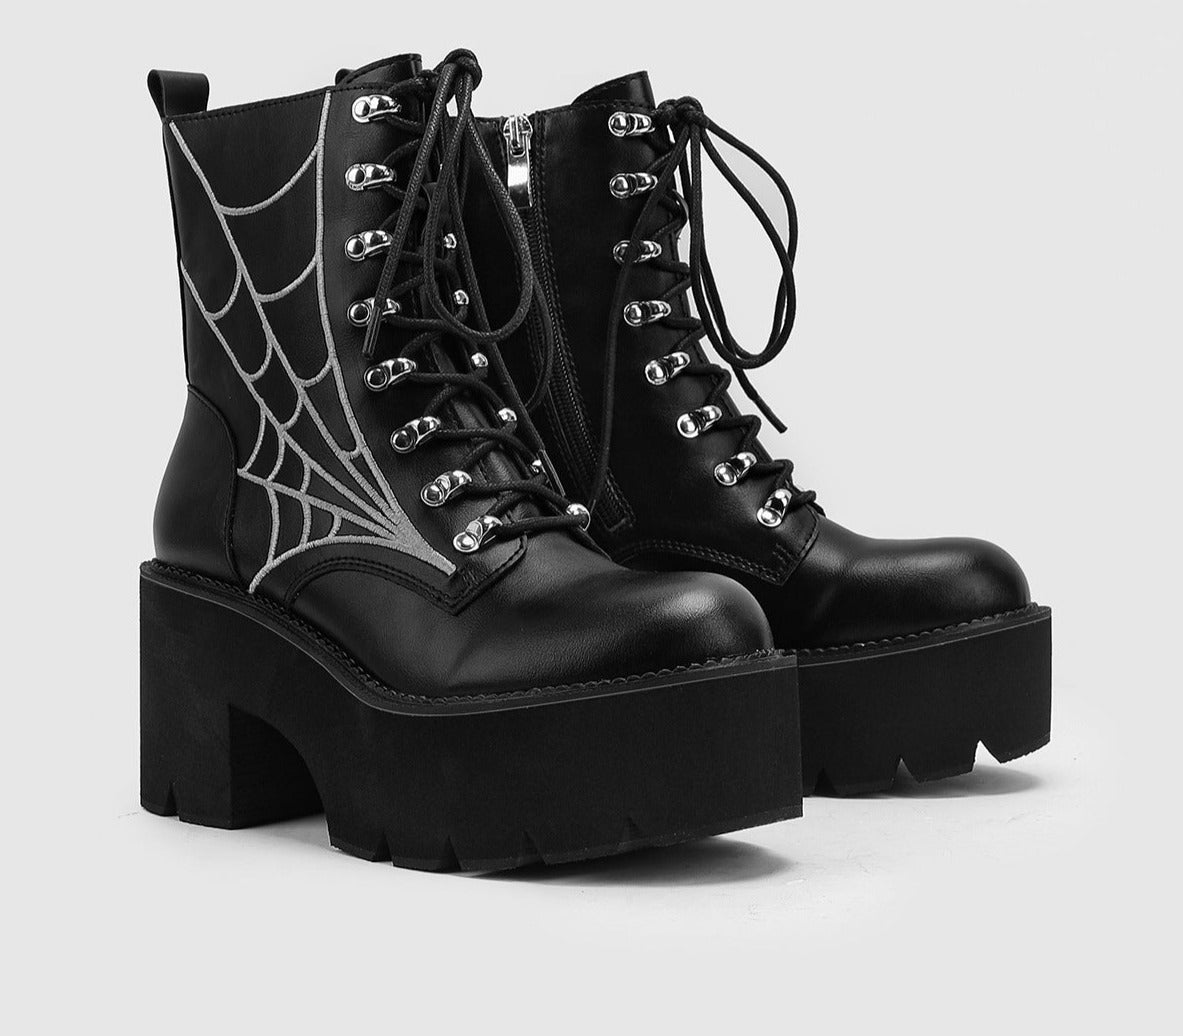 Spider Web Print Lace-Up Platform Ankle Boots